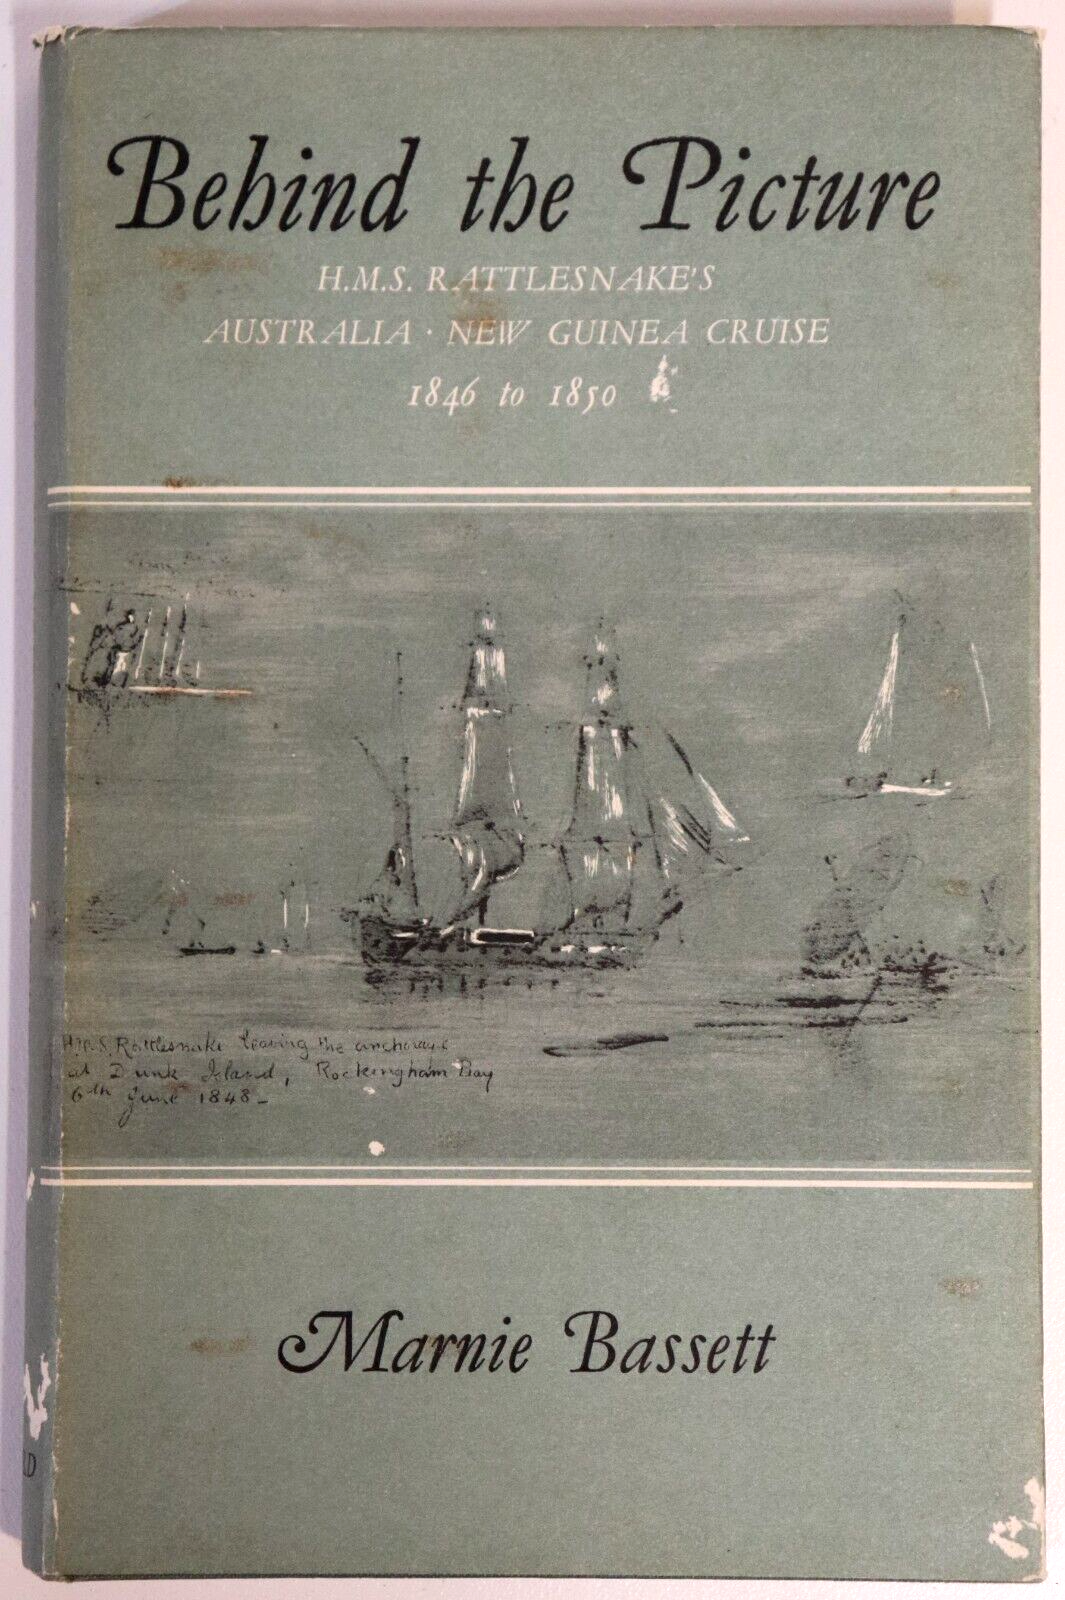 HMS Rattlesnake's Australia New Guinea Cruise - 1966 - Maritime History Book